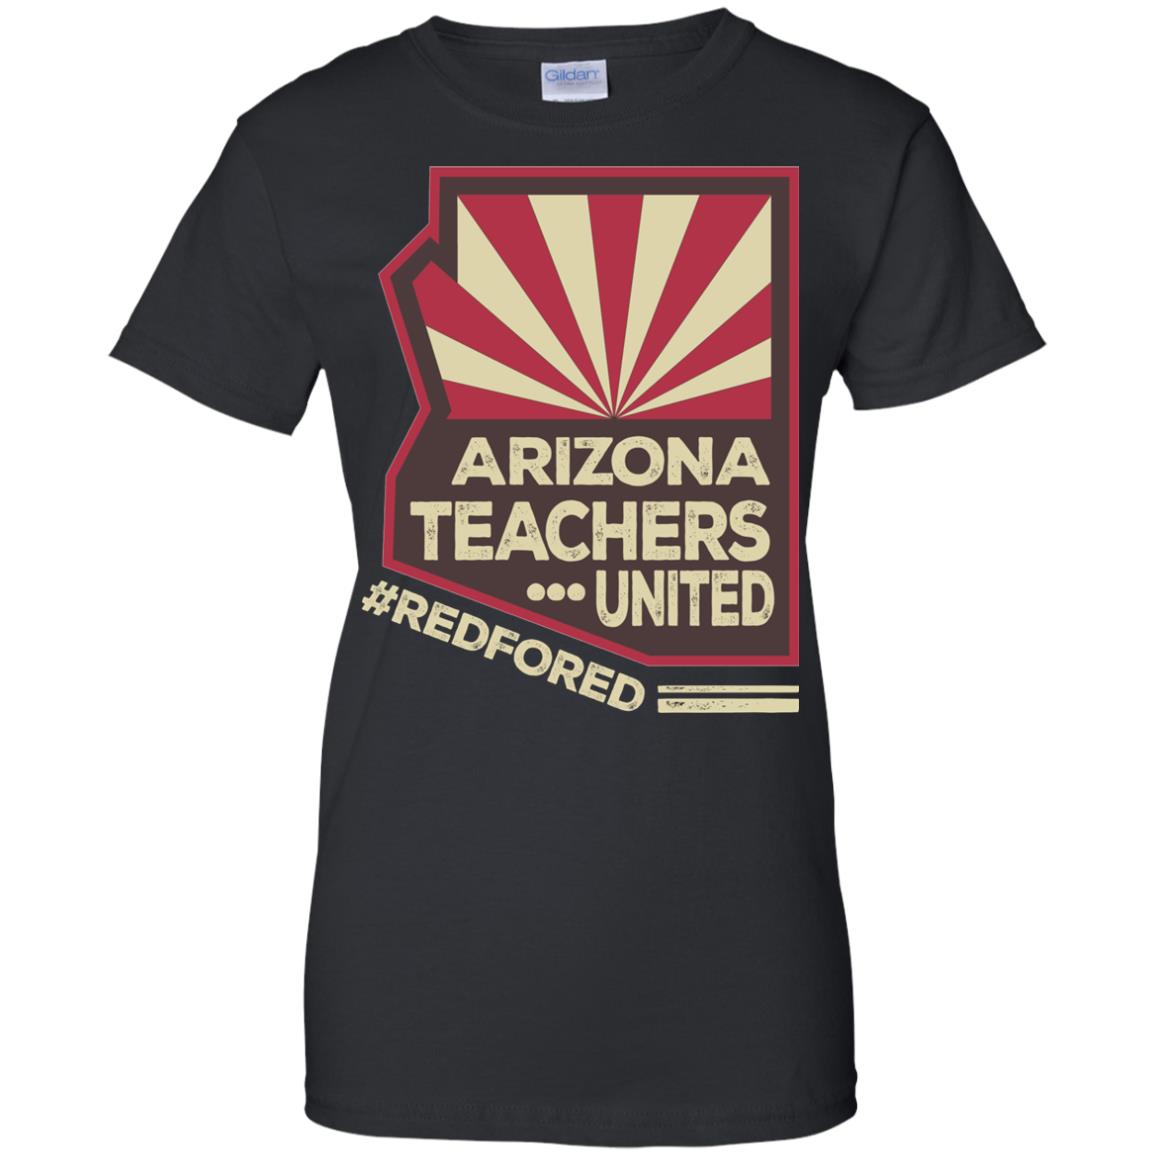 Arizona Tea Red For Ed Shirts